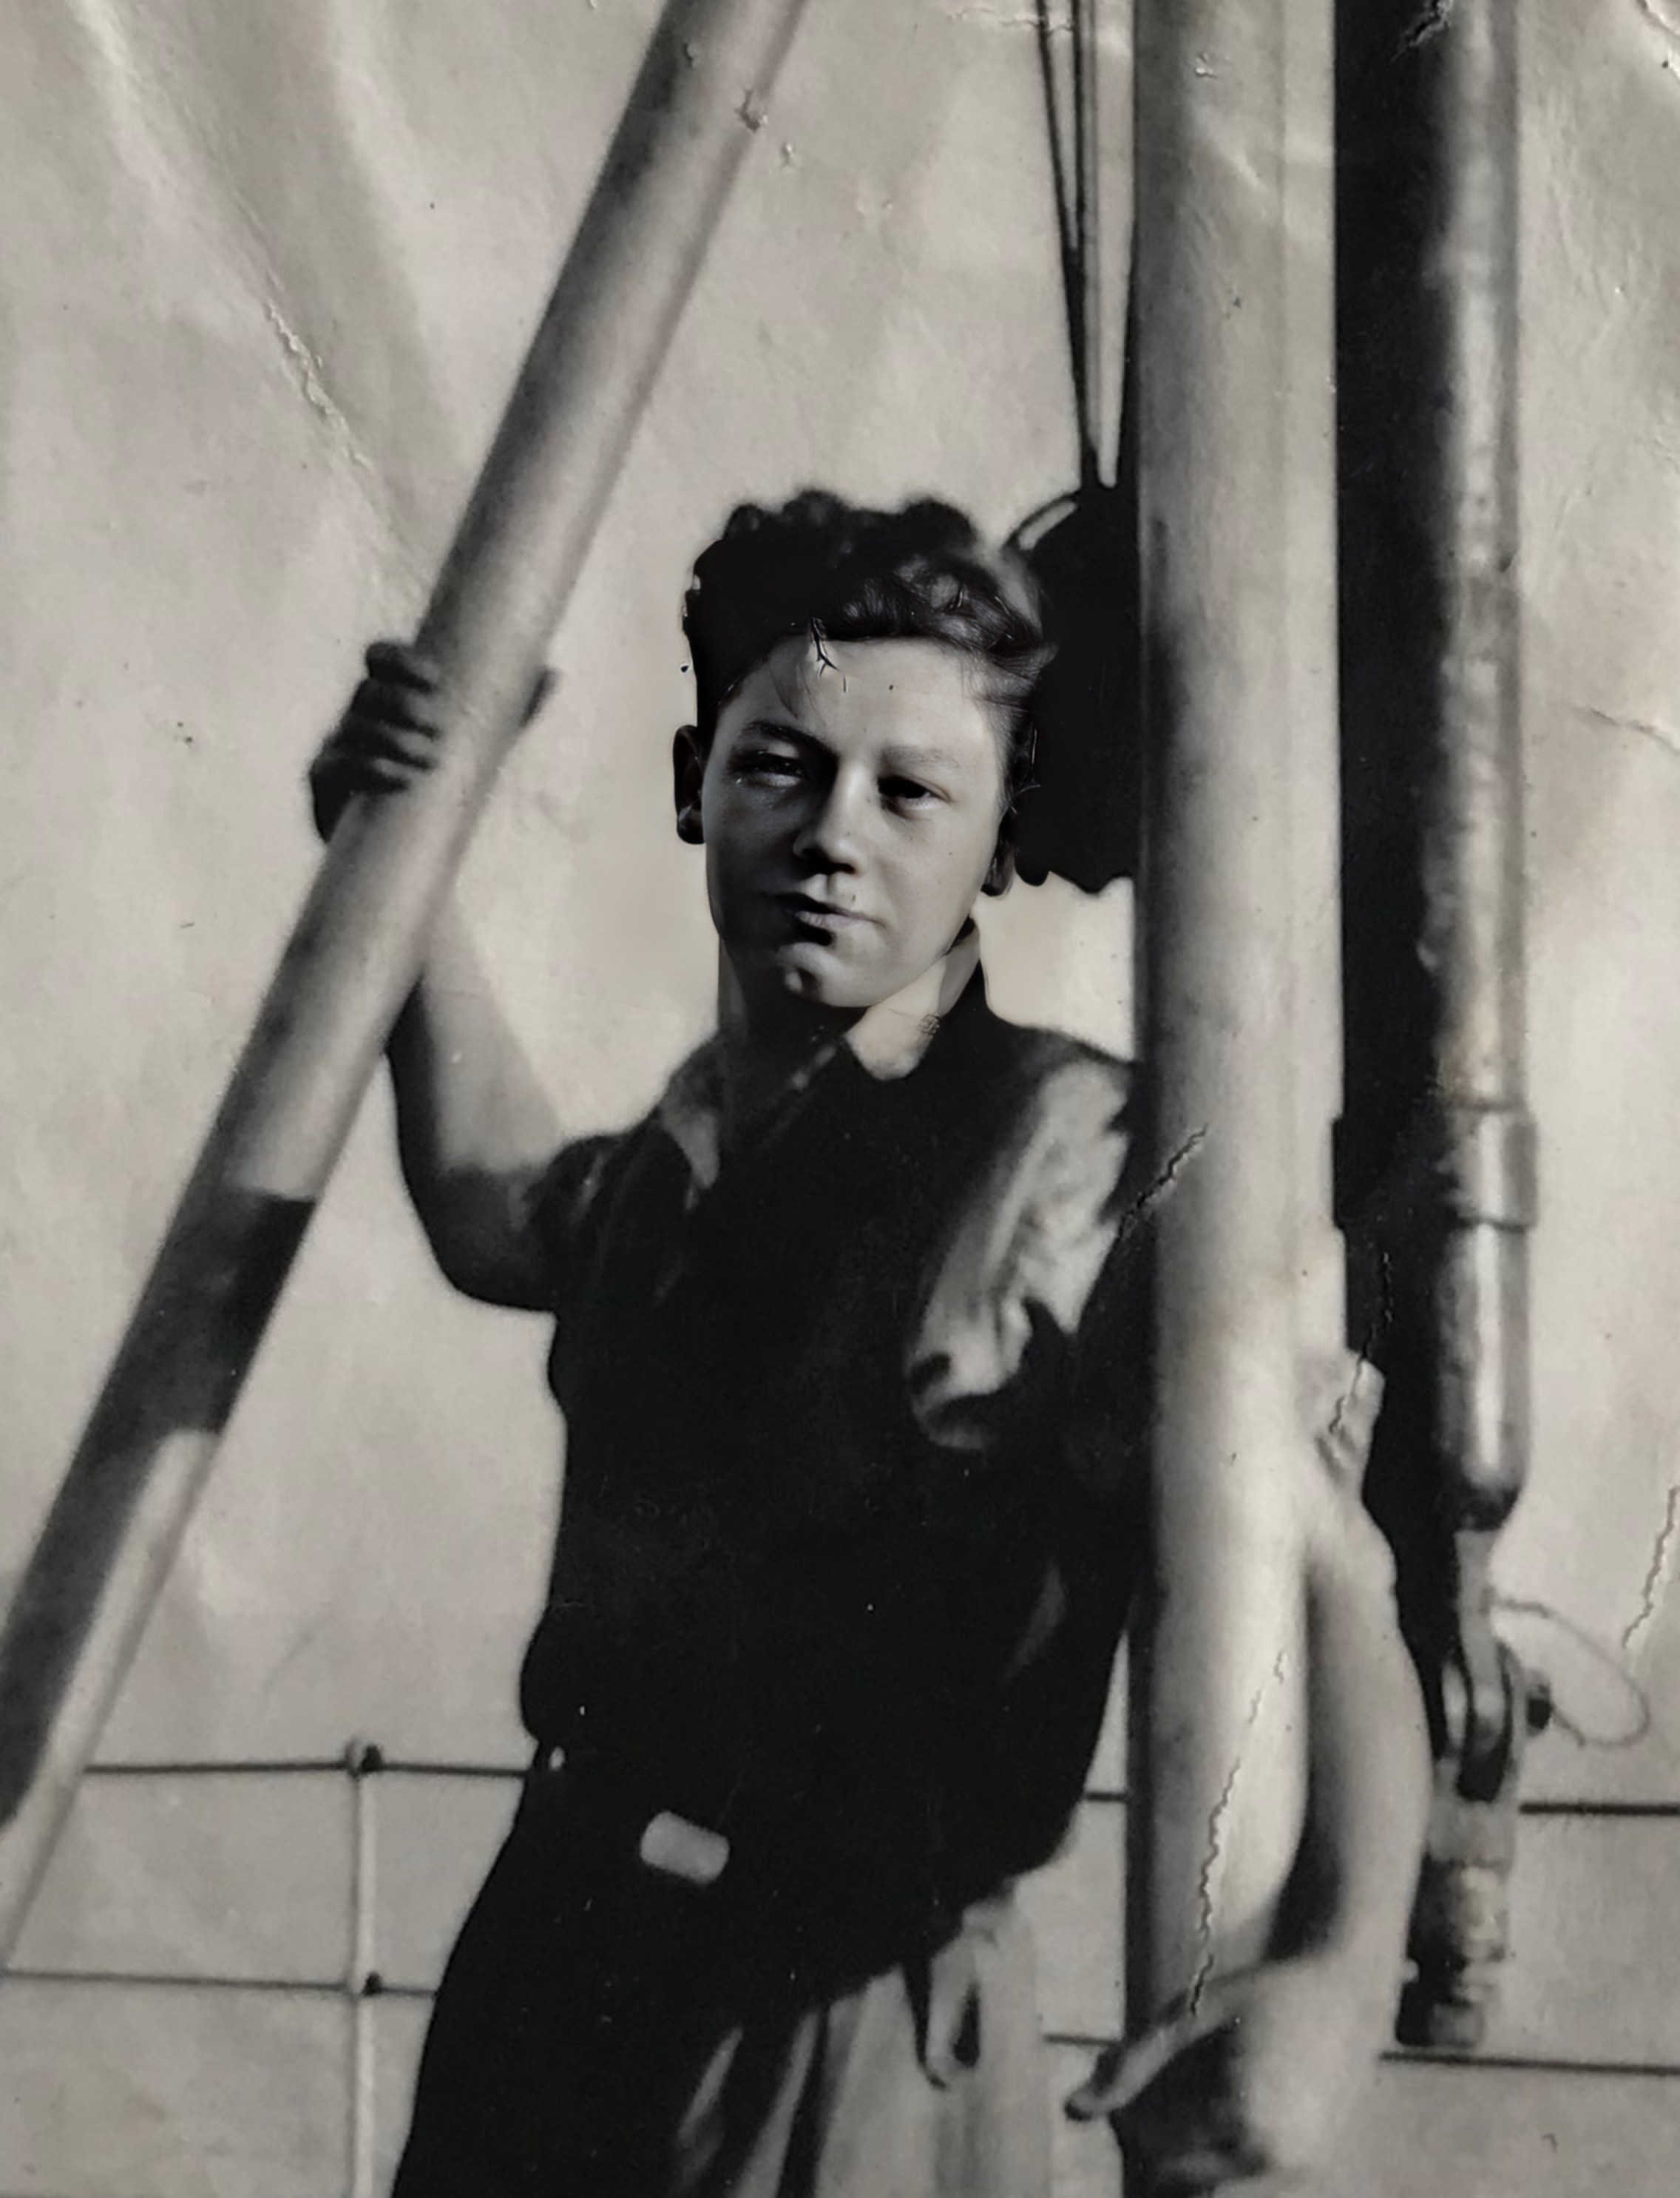 Brian Perren aged 18 in 1949